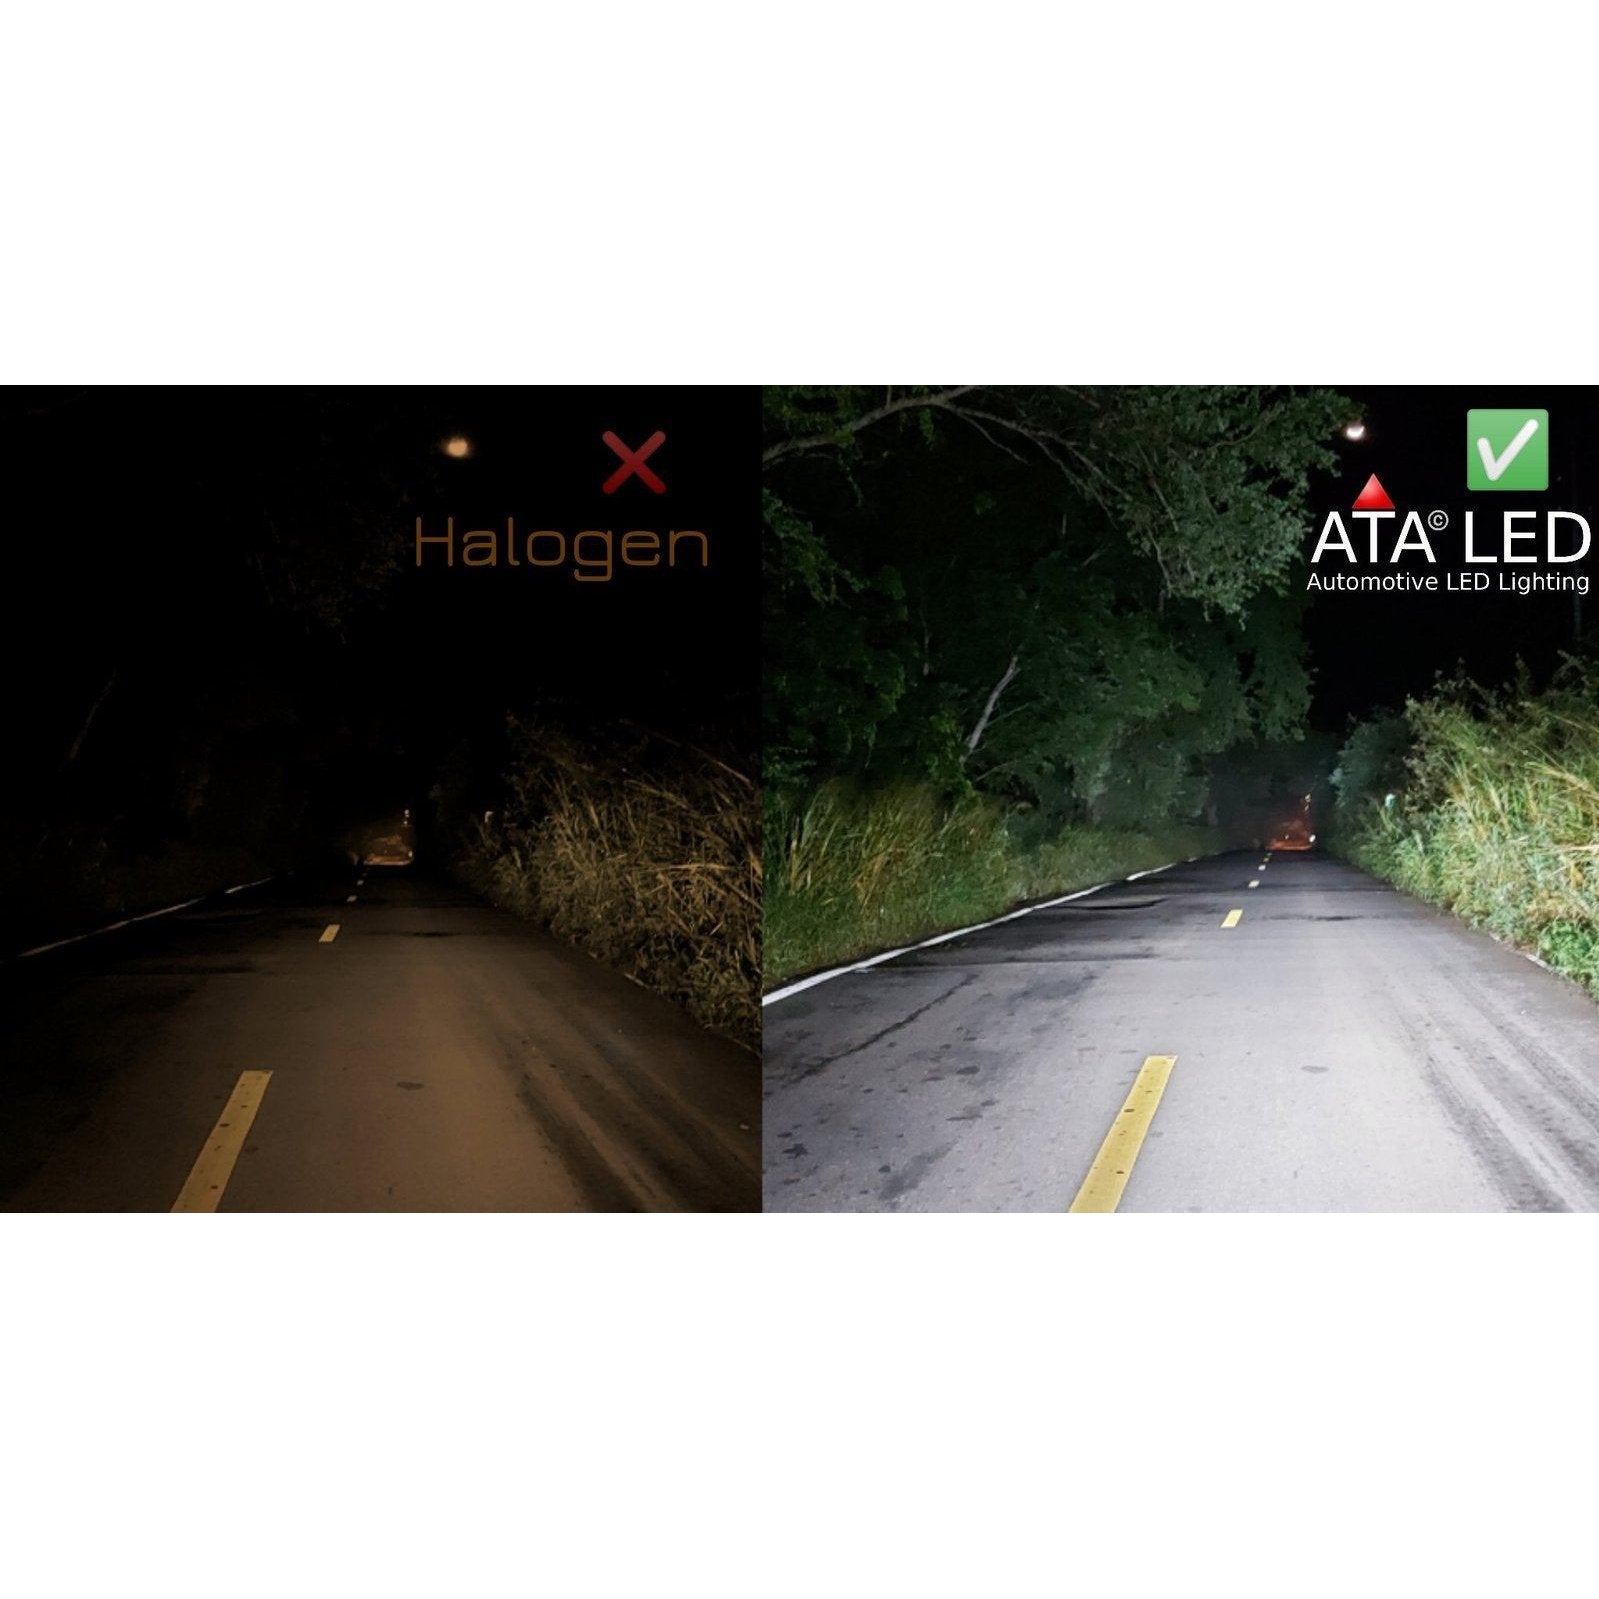 Halogen VS ATA LED 